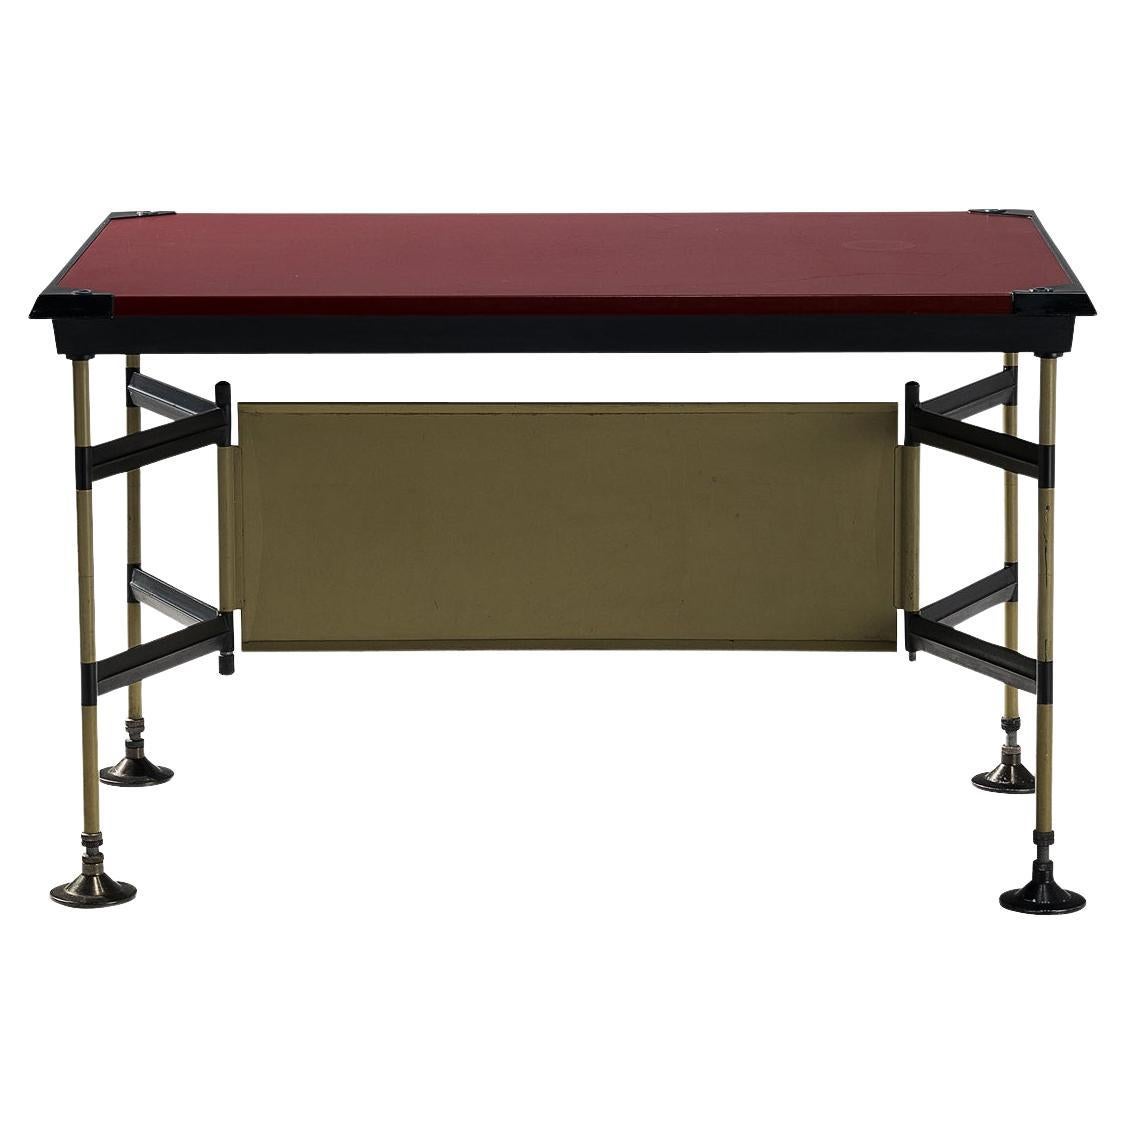 Studio BBPR for Olivetti 'Spazio' Multifunctional Table  For Sale